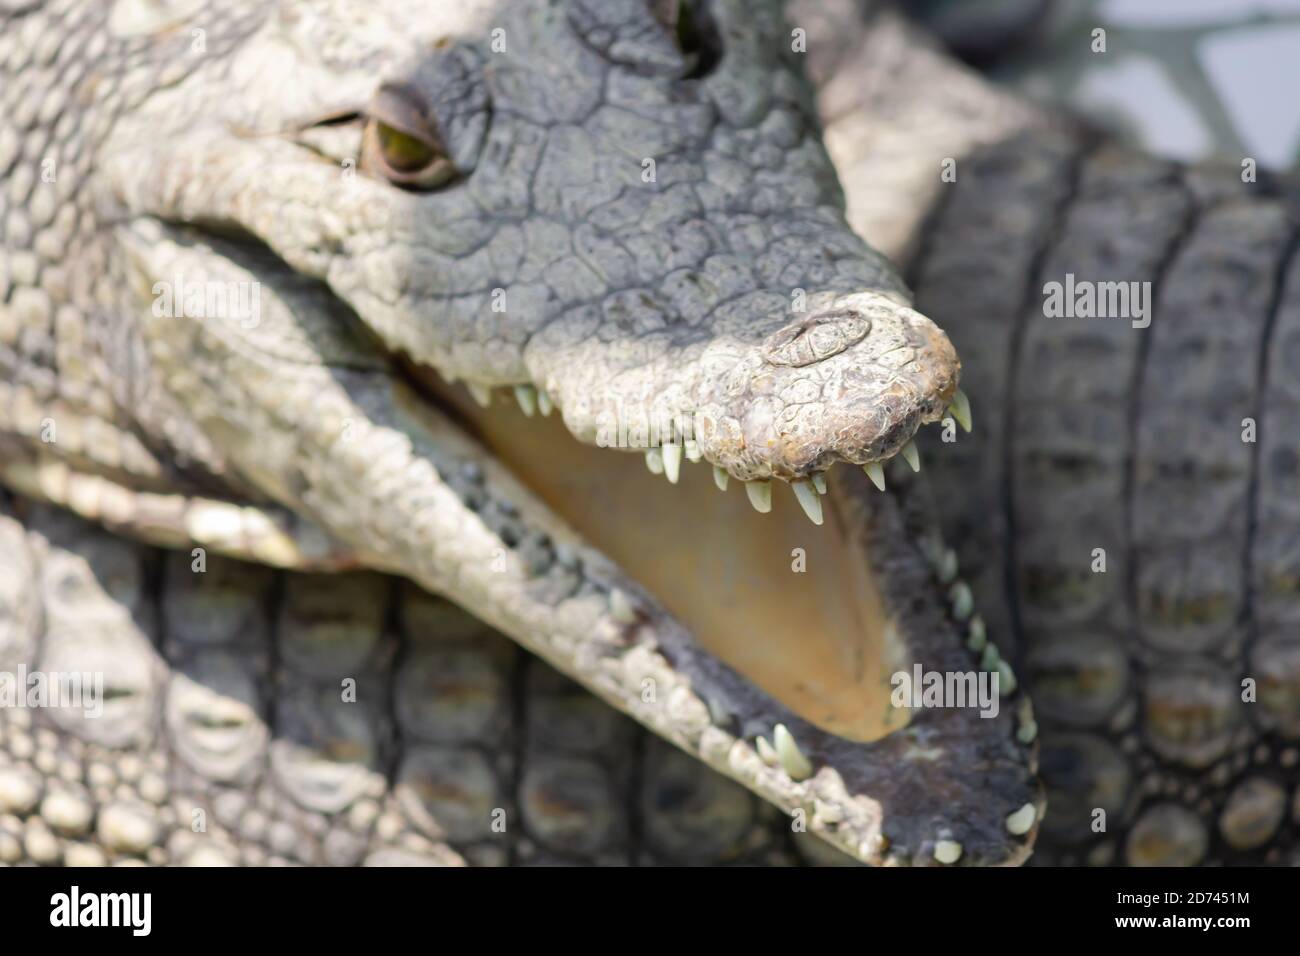 crocodile's mouth close-up Stock Photo